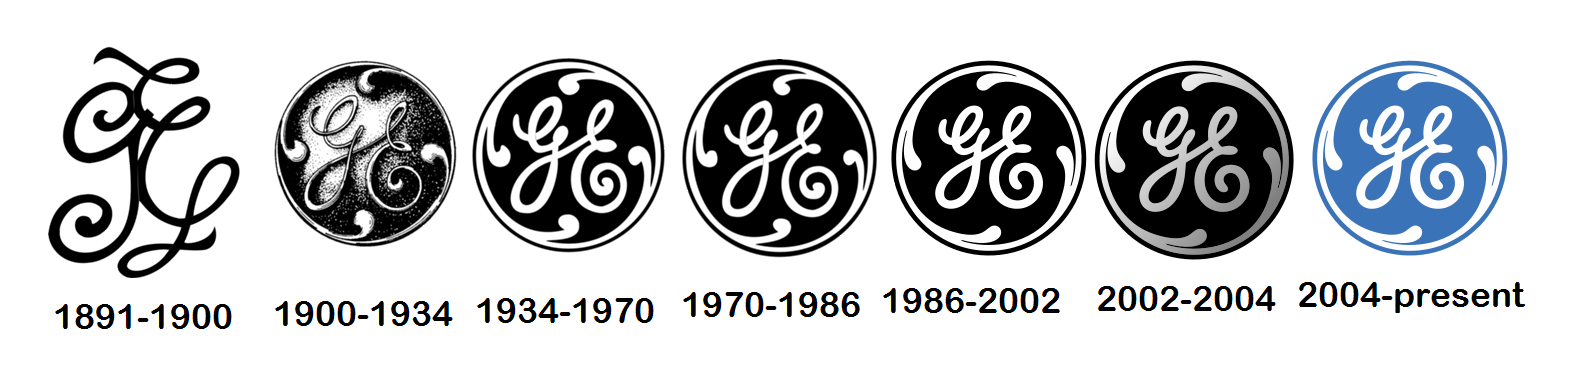 GE Logo History - Logos Photo (35779143) - Fanpop